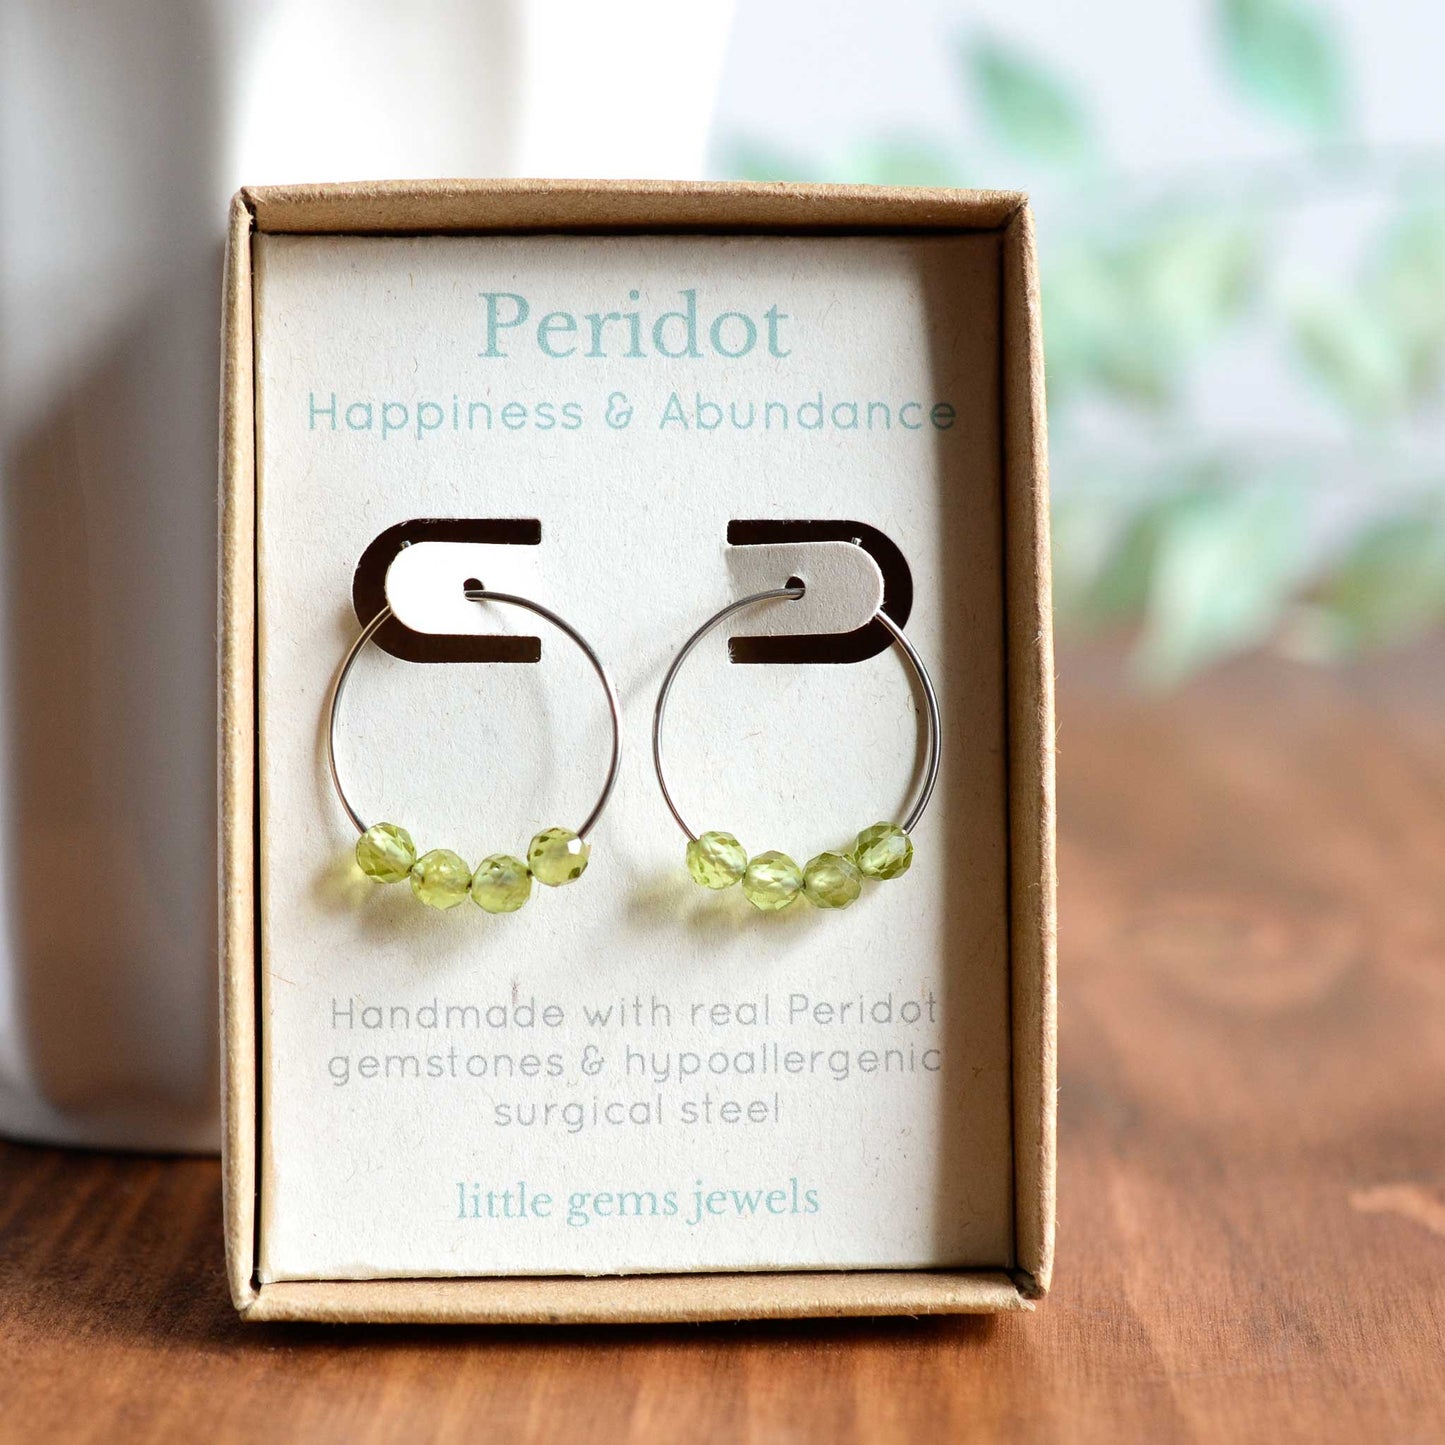 Green Peridot gemstone hoop earrings in gift box